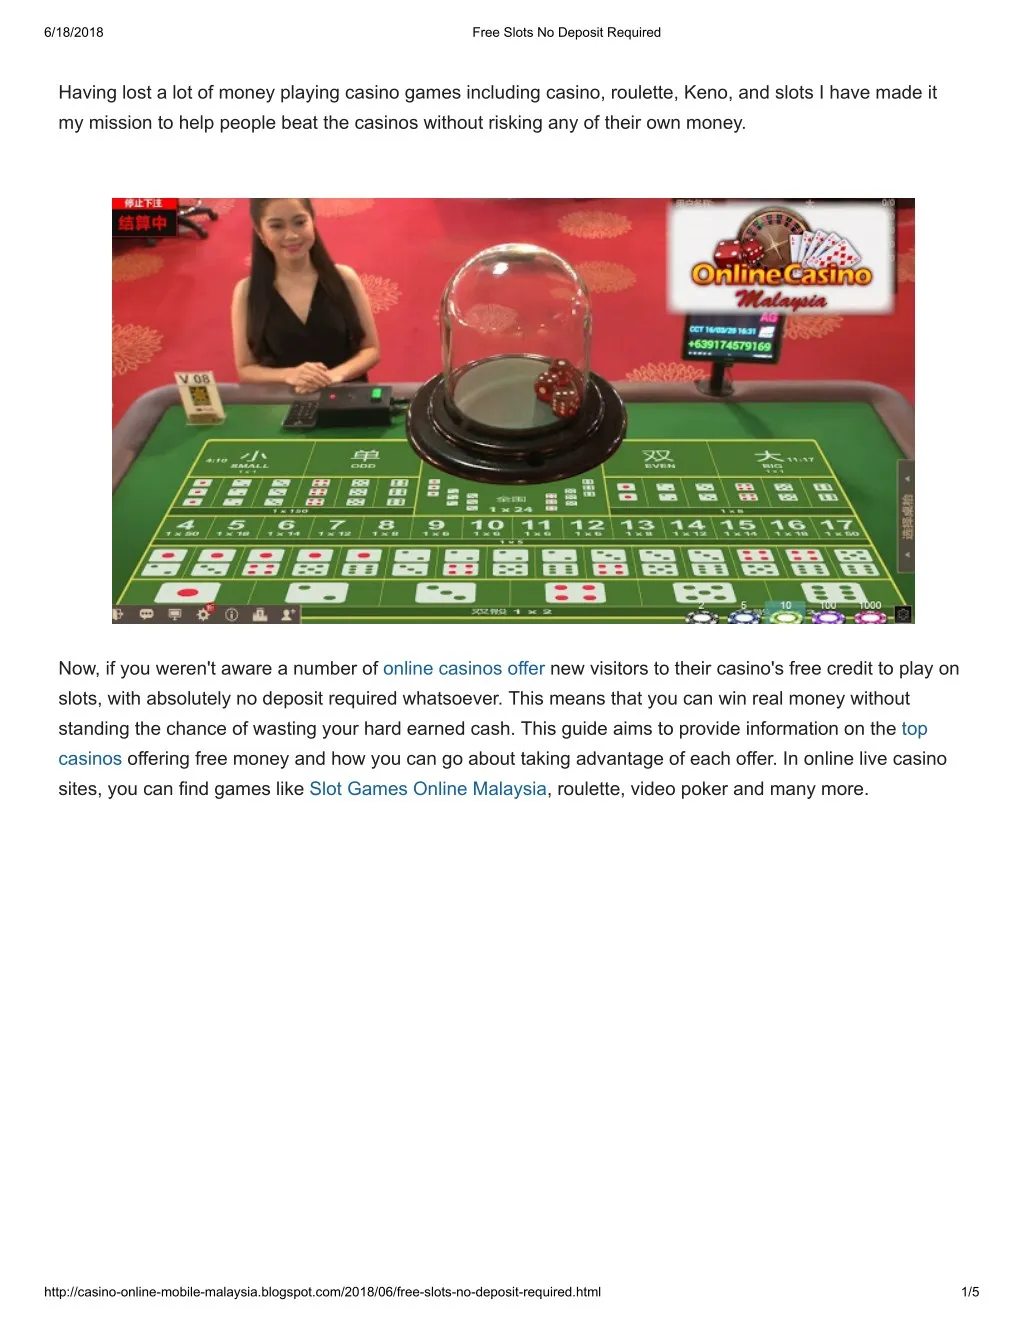 Gamble Luck book of ra free spins no deposit Teller Bitcoin Slot